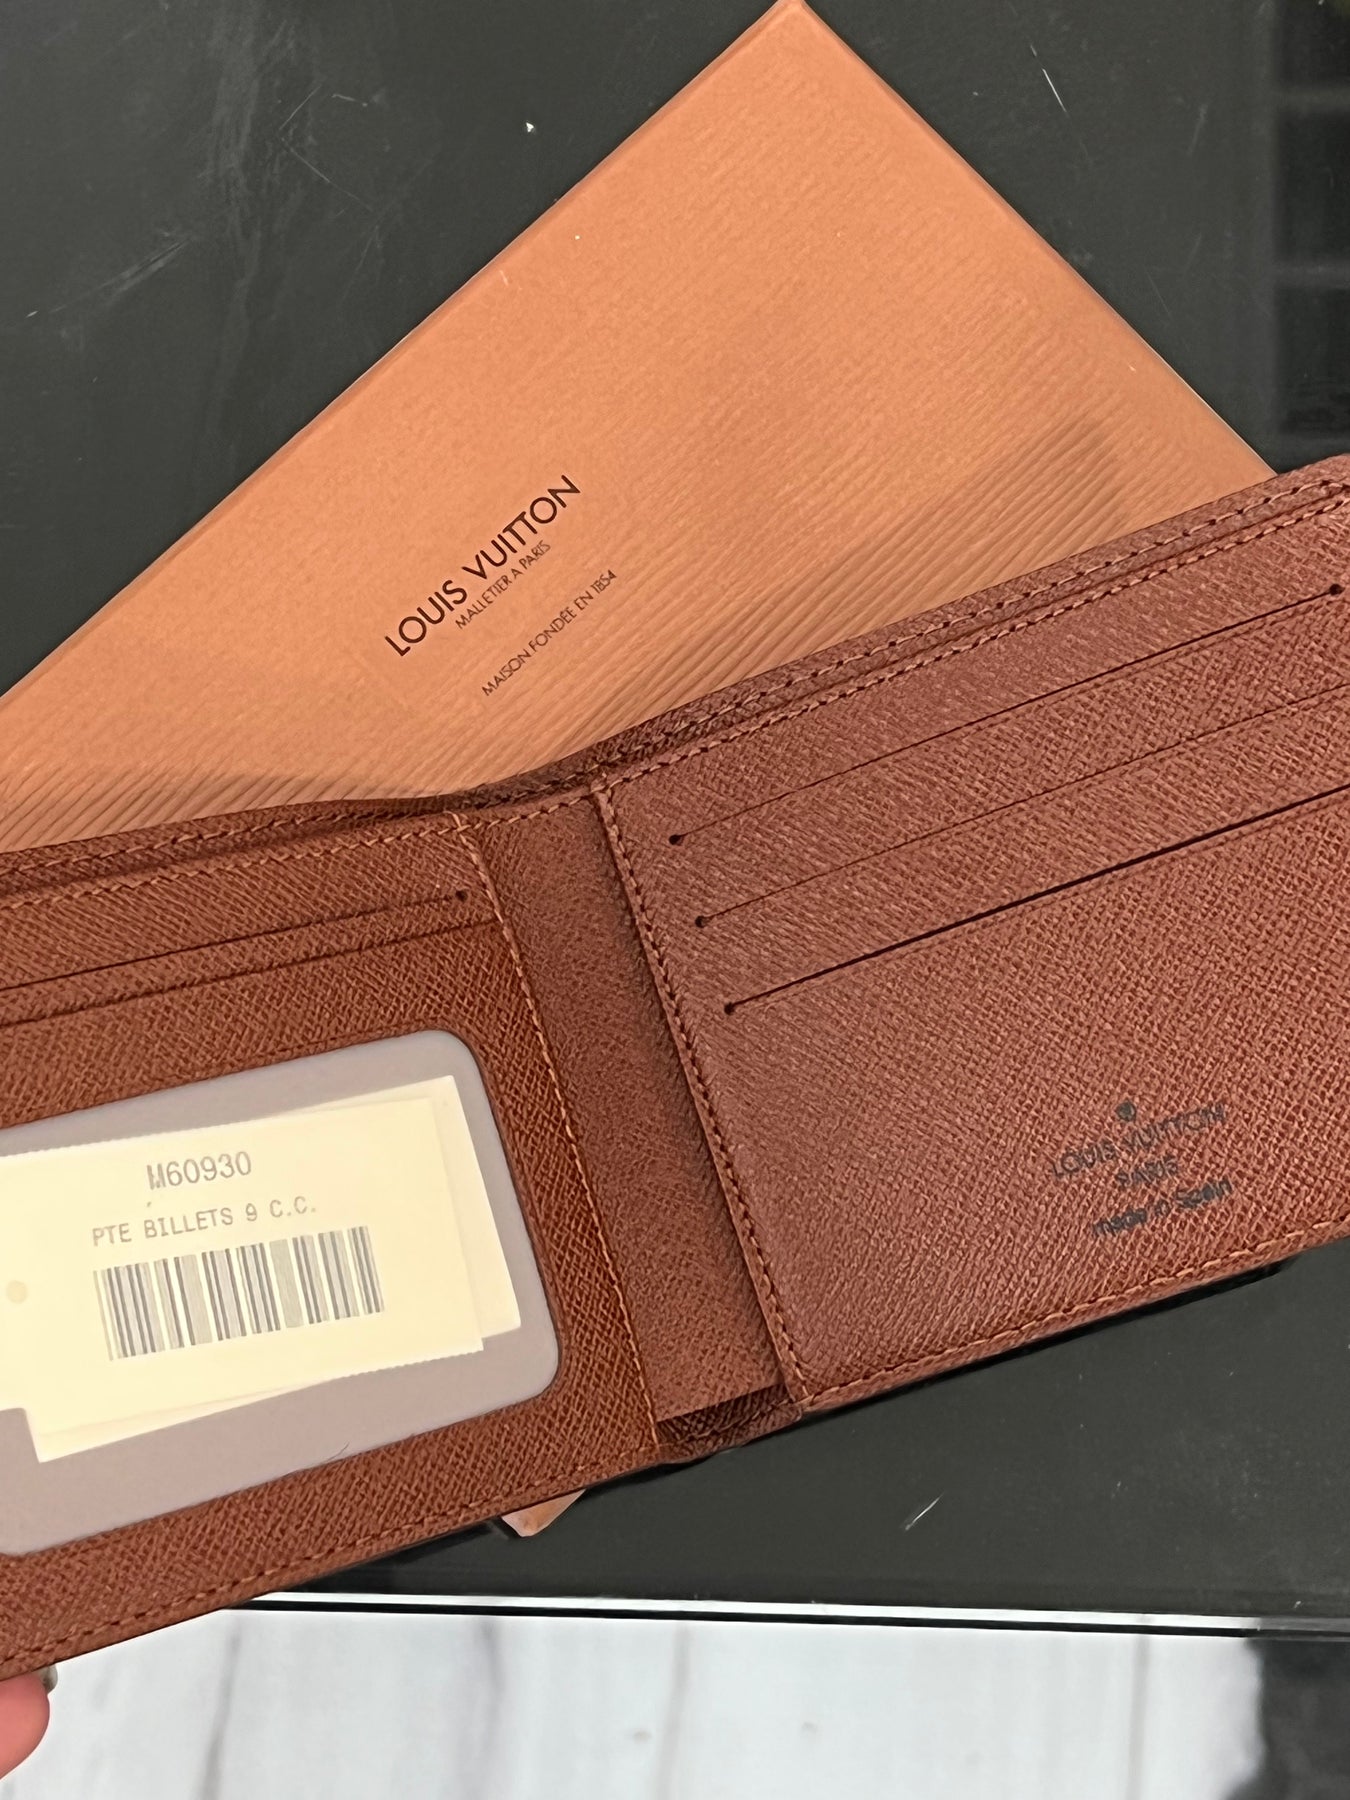 Lv men's wallet m60930